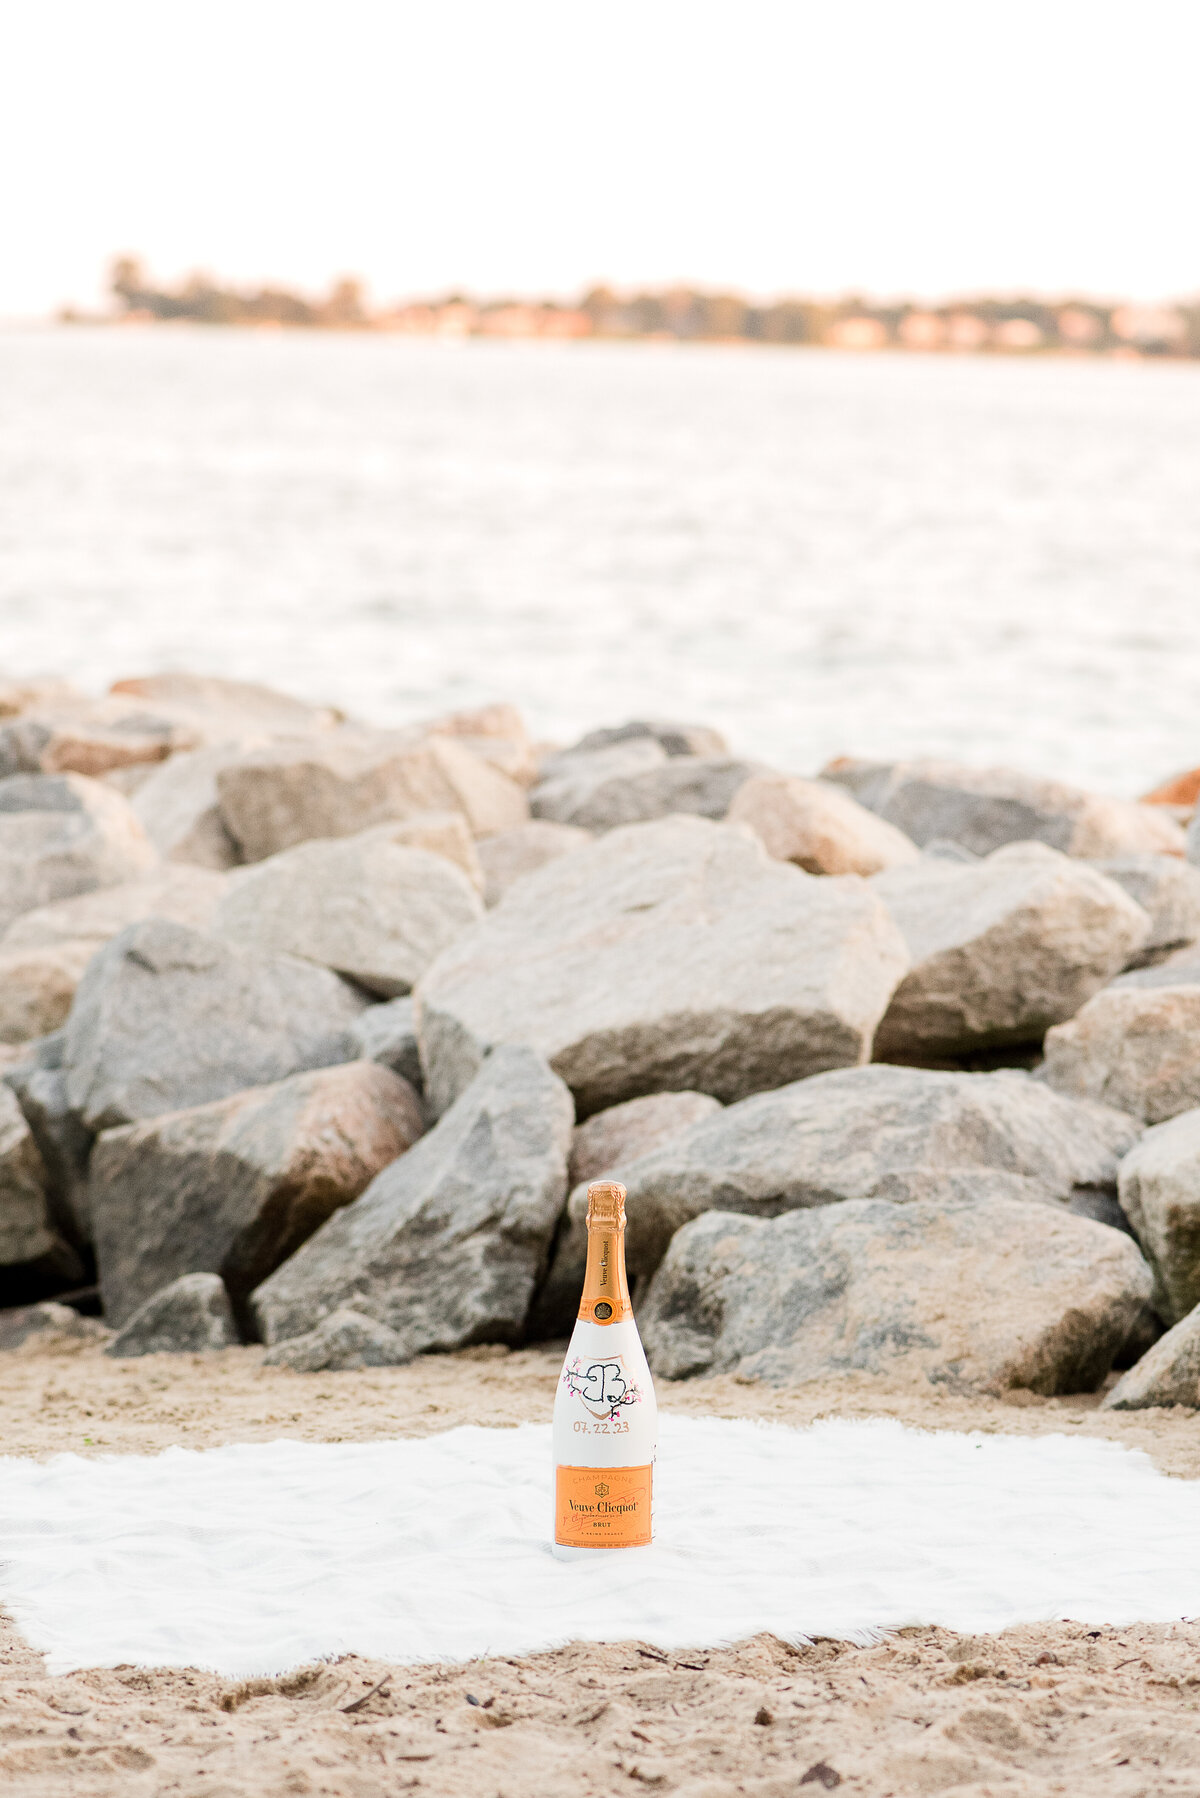 custom champagne bottle on picnic blanket at the beach